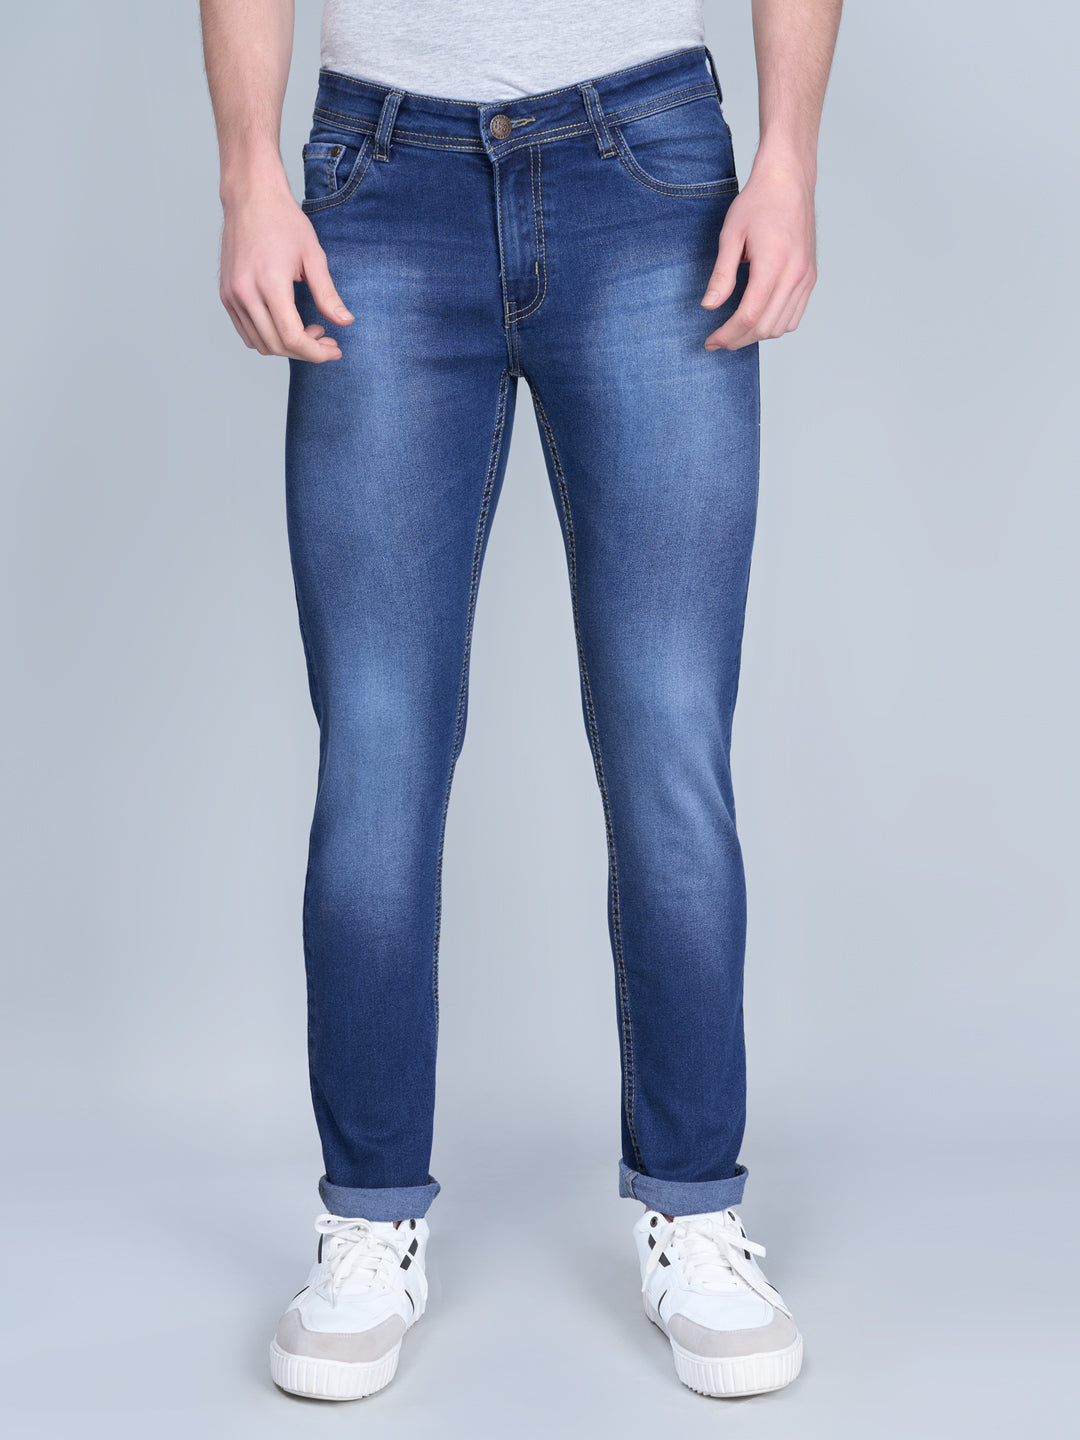 STEAMZ: Your Jeans Pick – Steamz